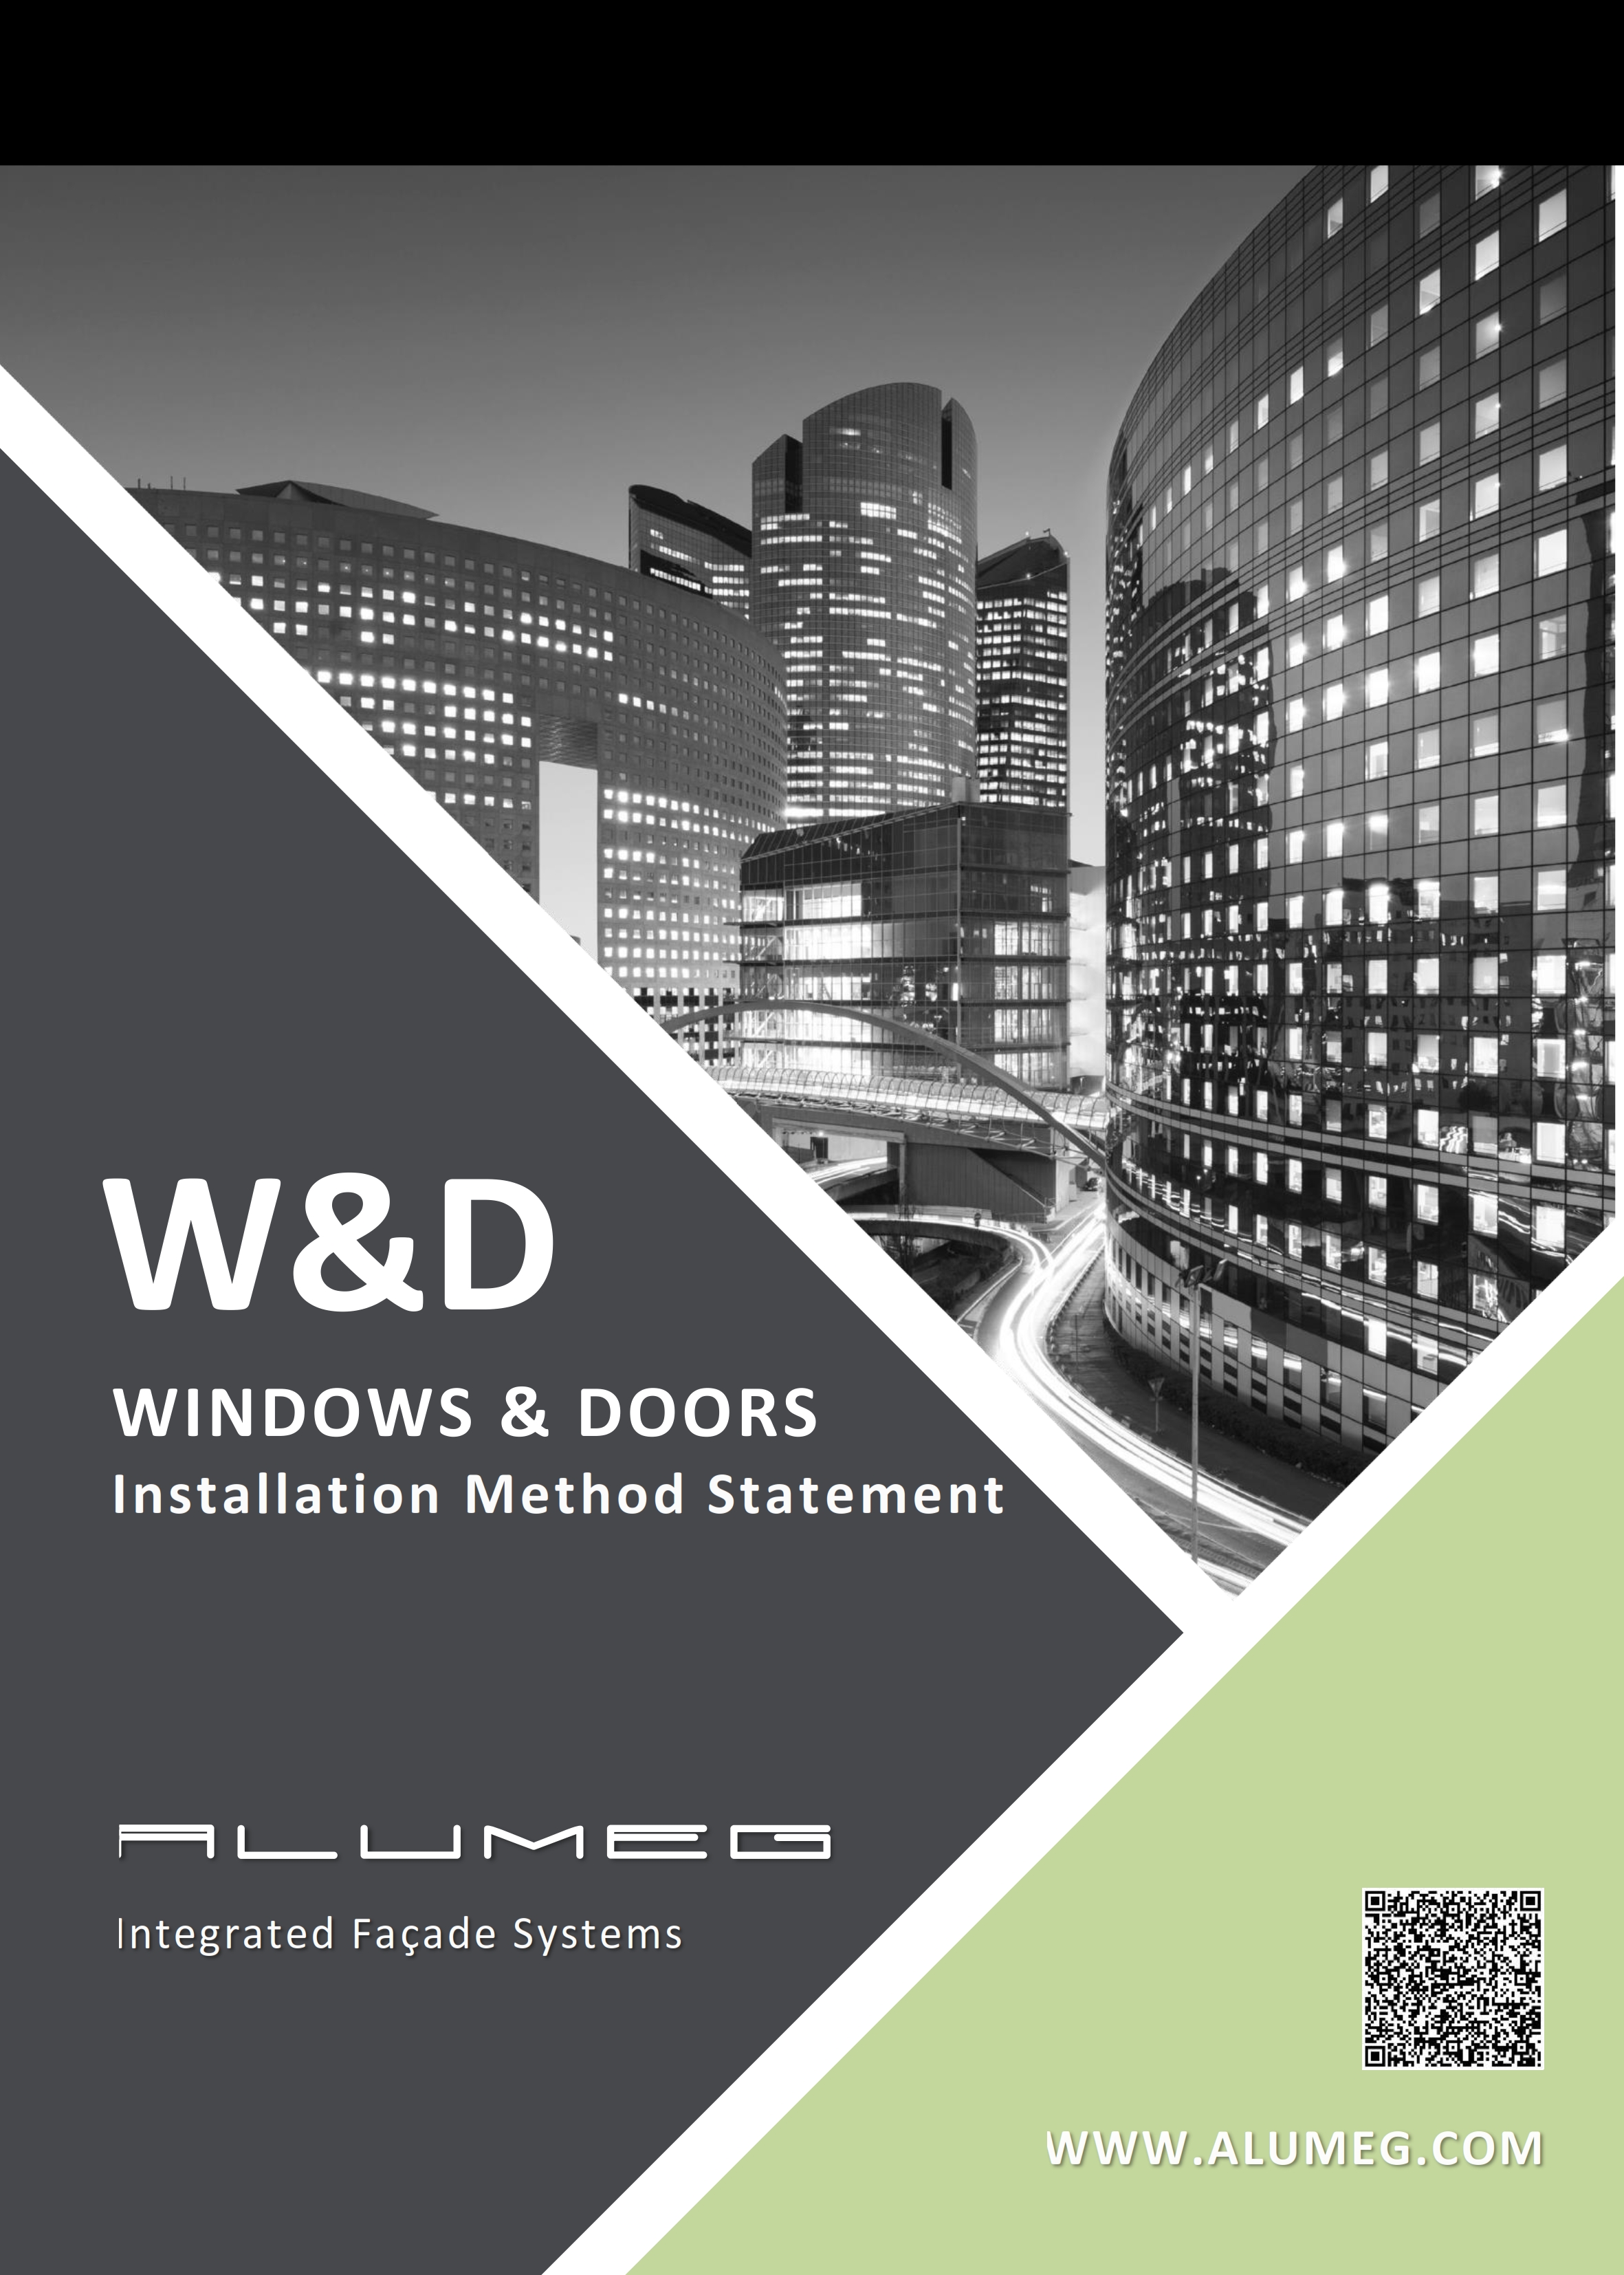 METHOD STATEMENT FOR WINDOWS & DOORS INSTALLATION